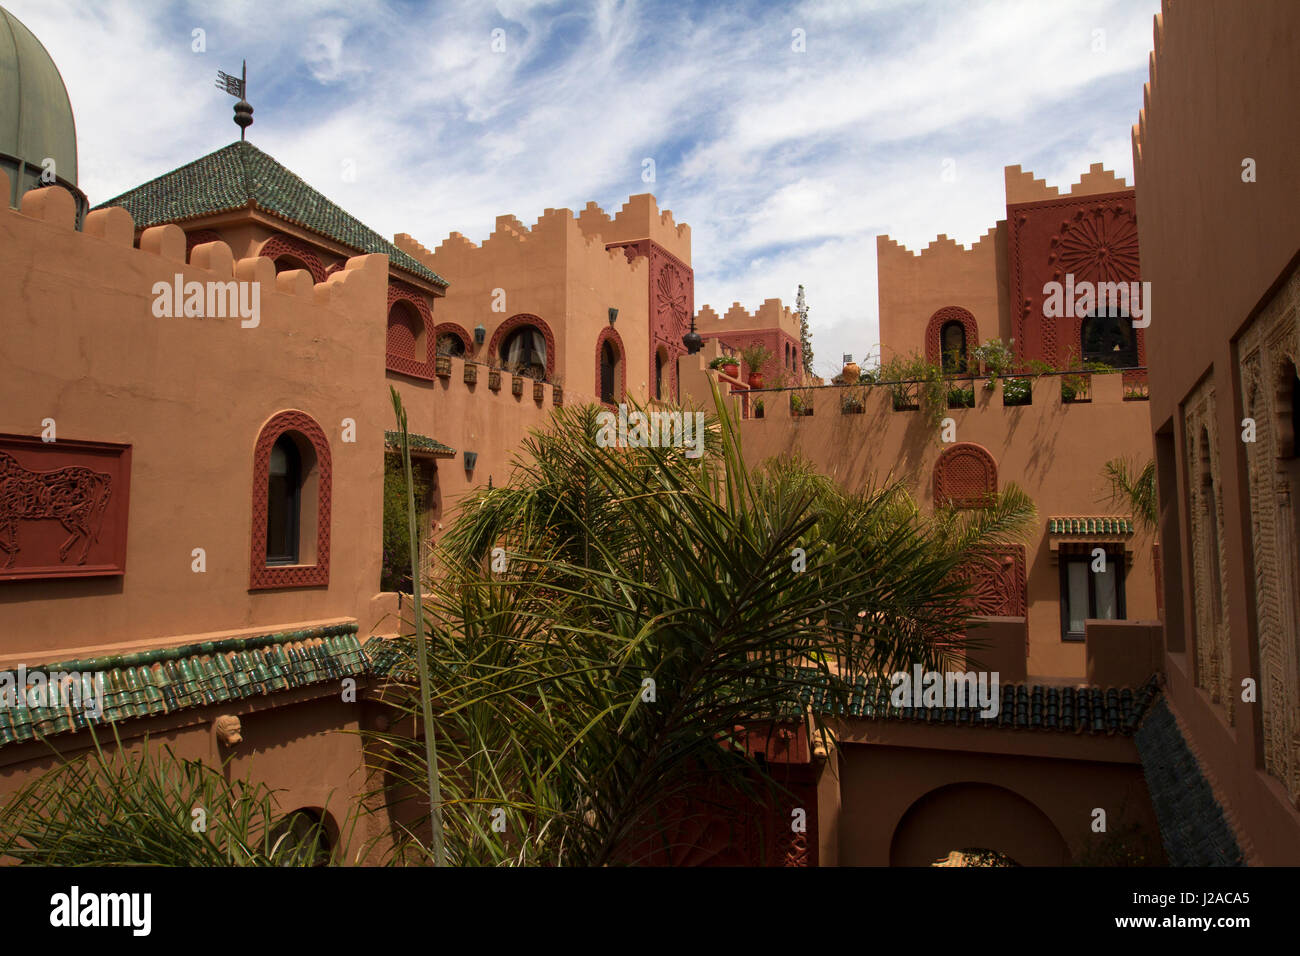 Morocco, Asni. Main Building at Richard Branson's Kasbah Tamadot luxury retreat in the Atlas Mountains. Stock Photo